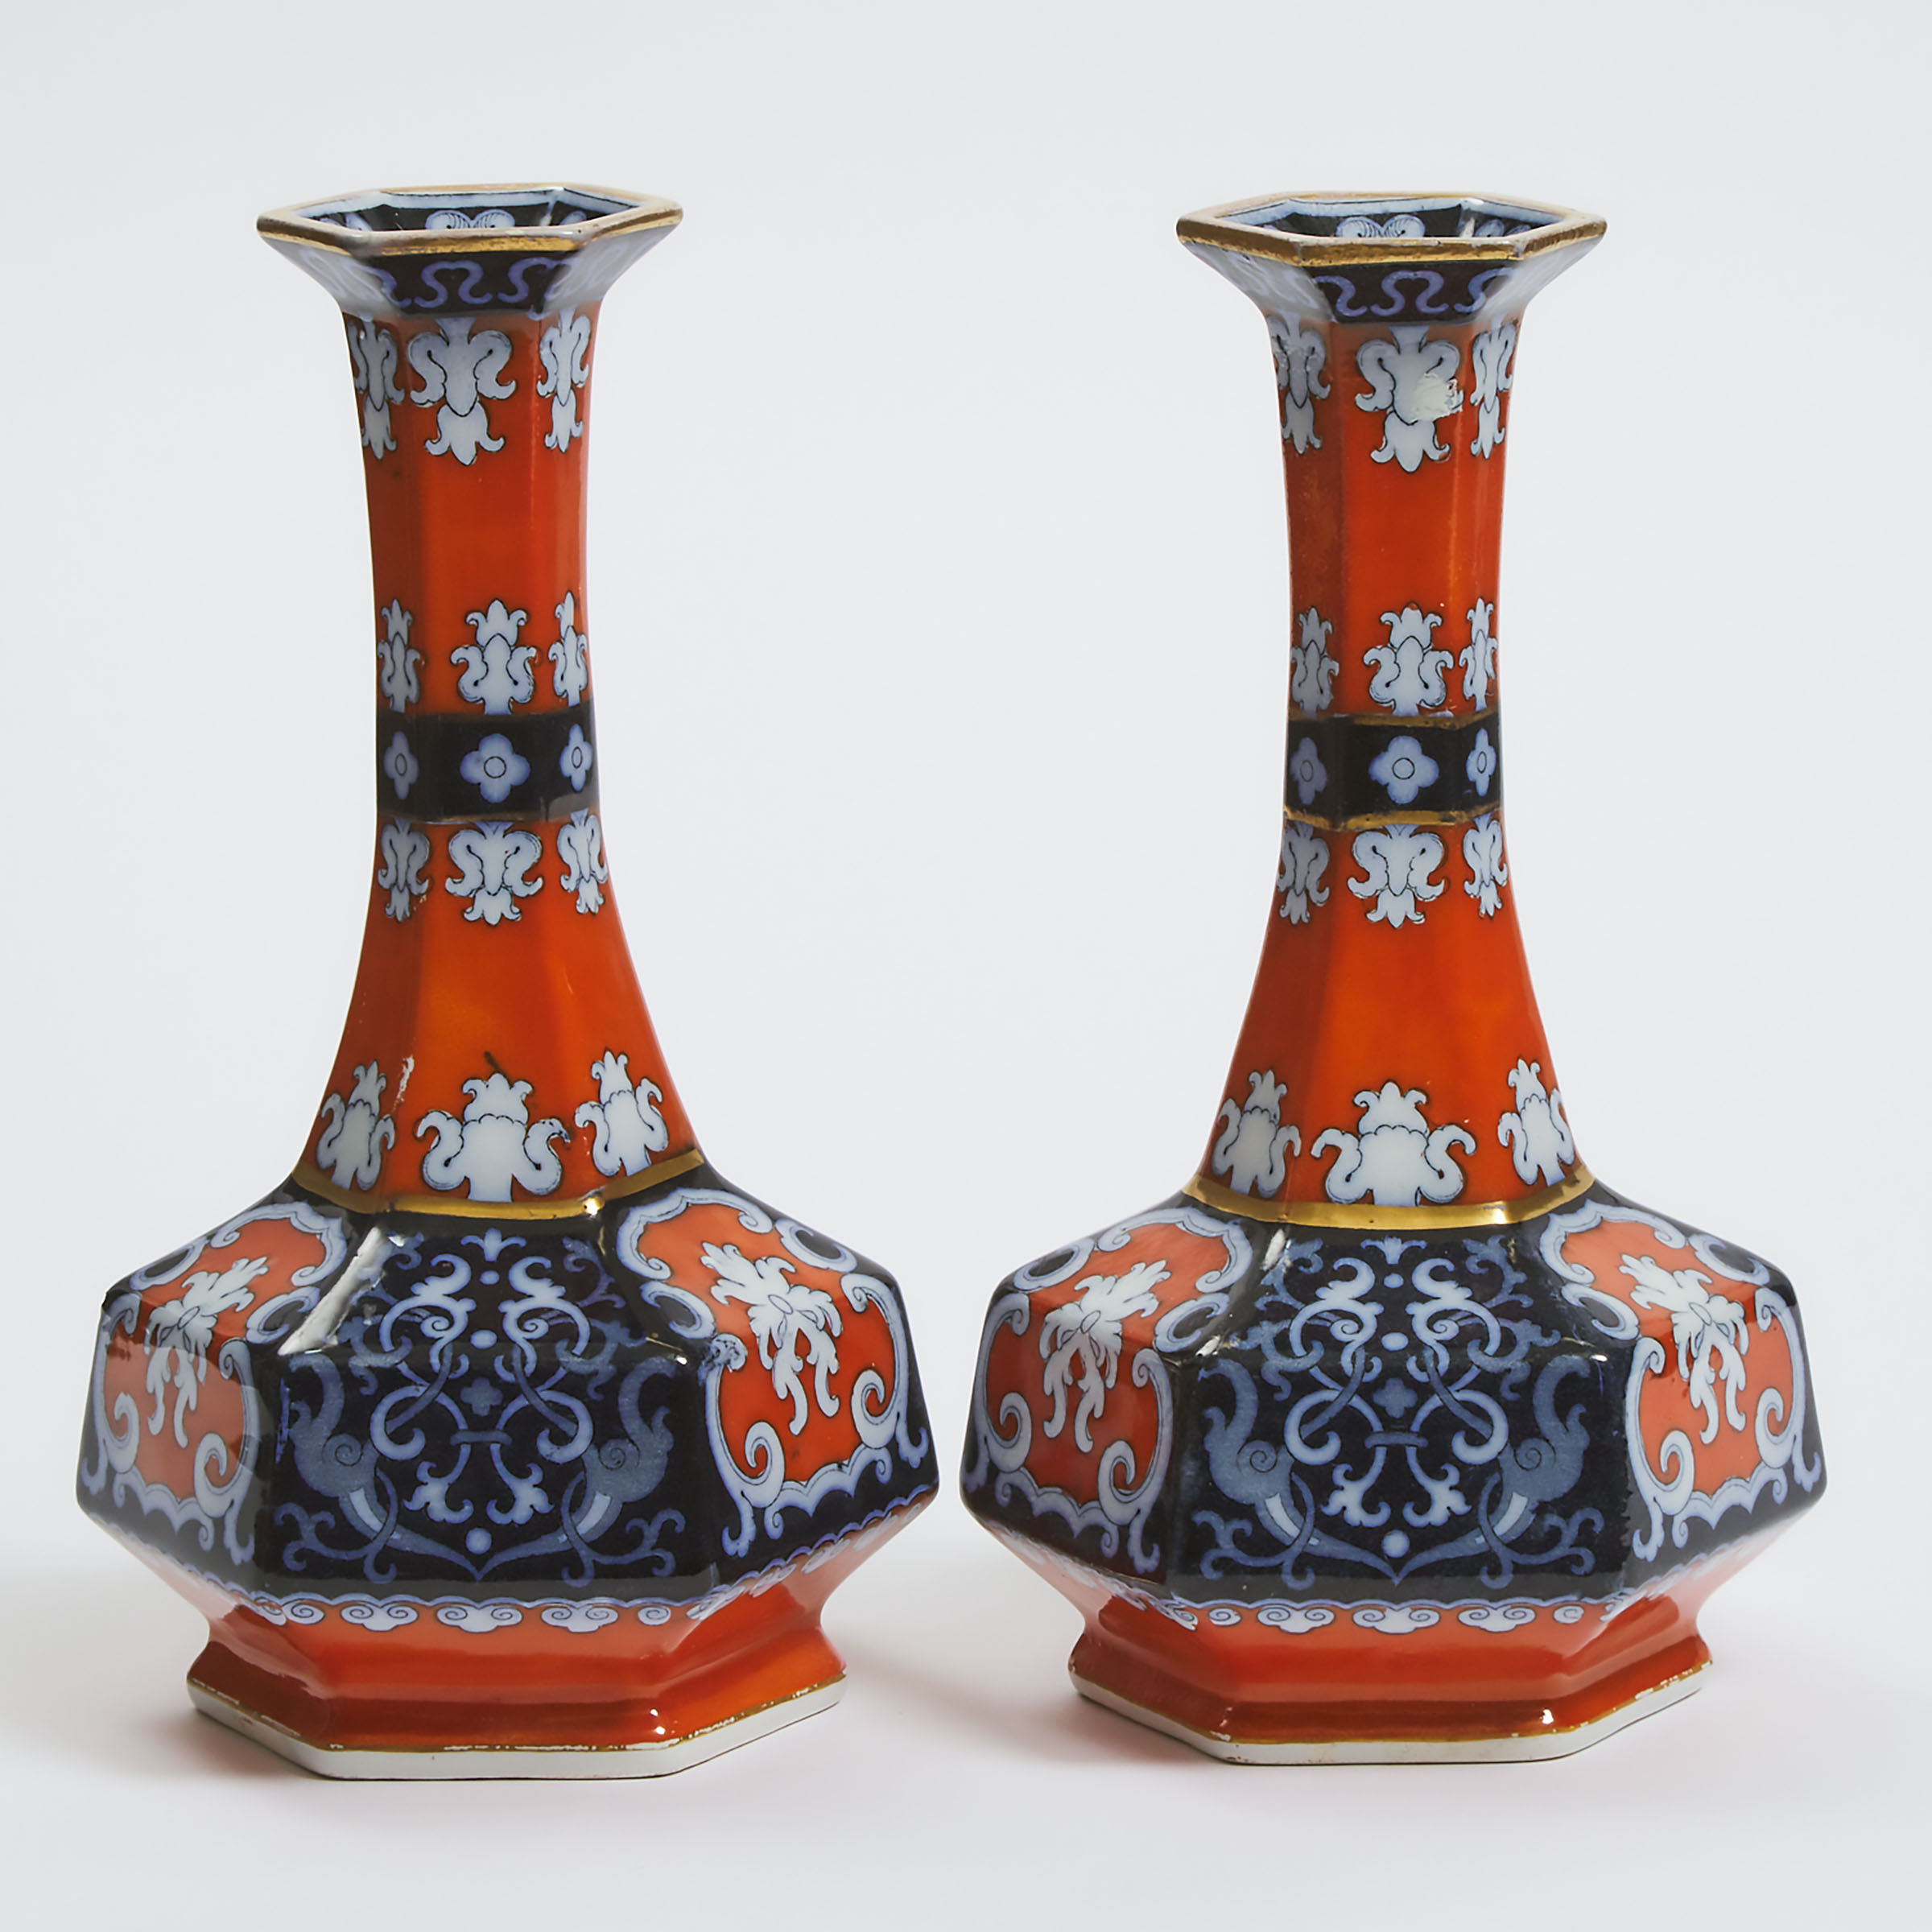 Pair of English Ironstone Hexagonal Vases, mid-19th century